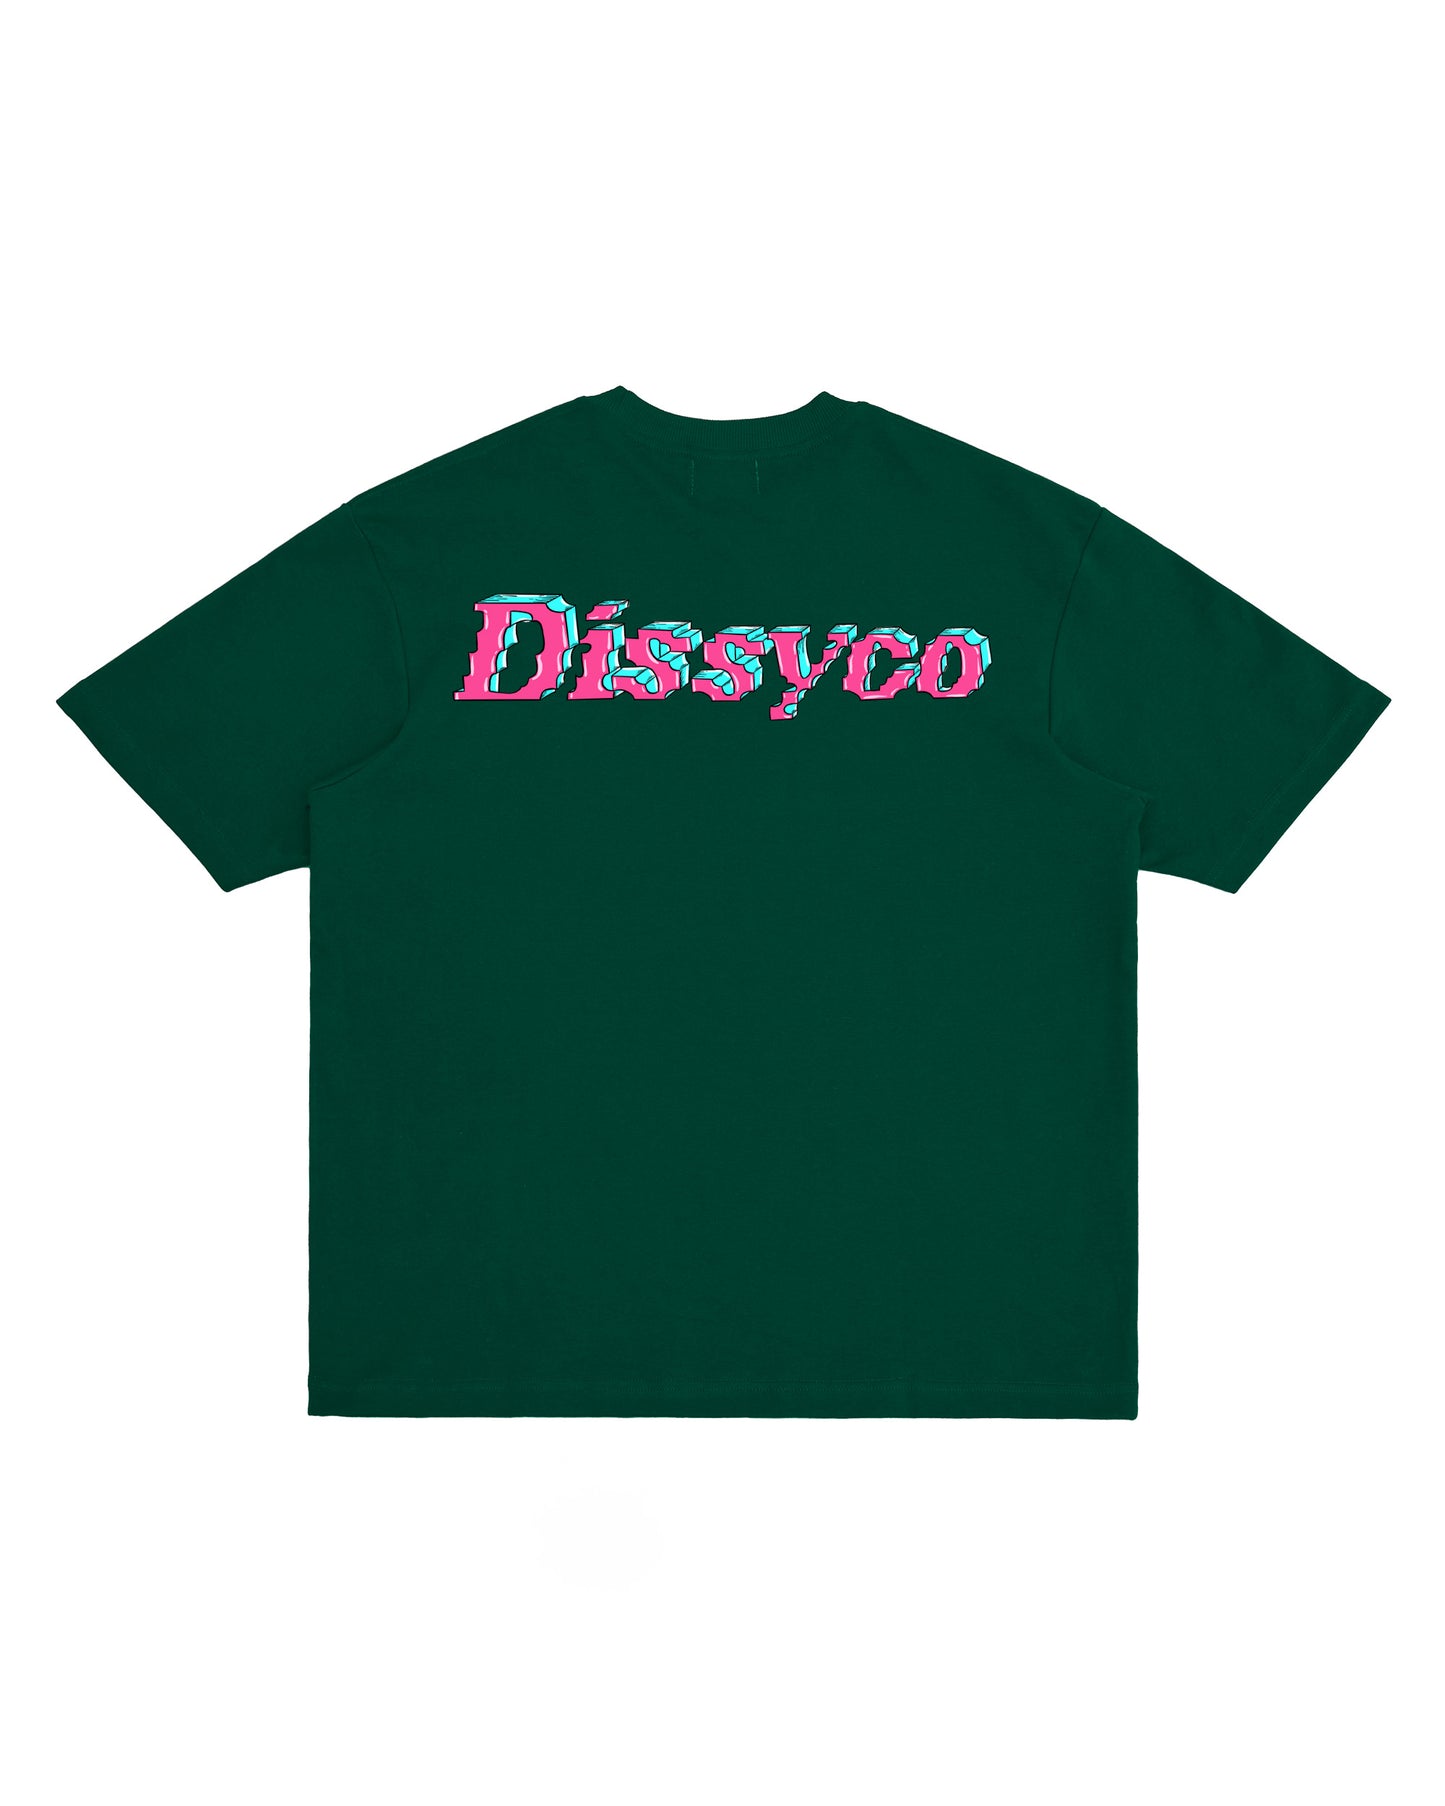 DISSYCO CYBERPUNK LOGO TEE (BLACK, WHITE, CREAM WHITE, LIGHT BLUE, BLUE, GREEN, PURPLE)